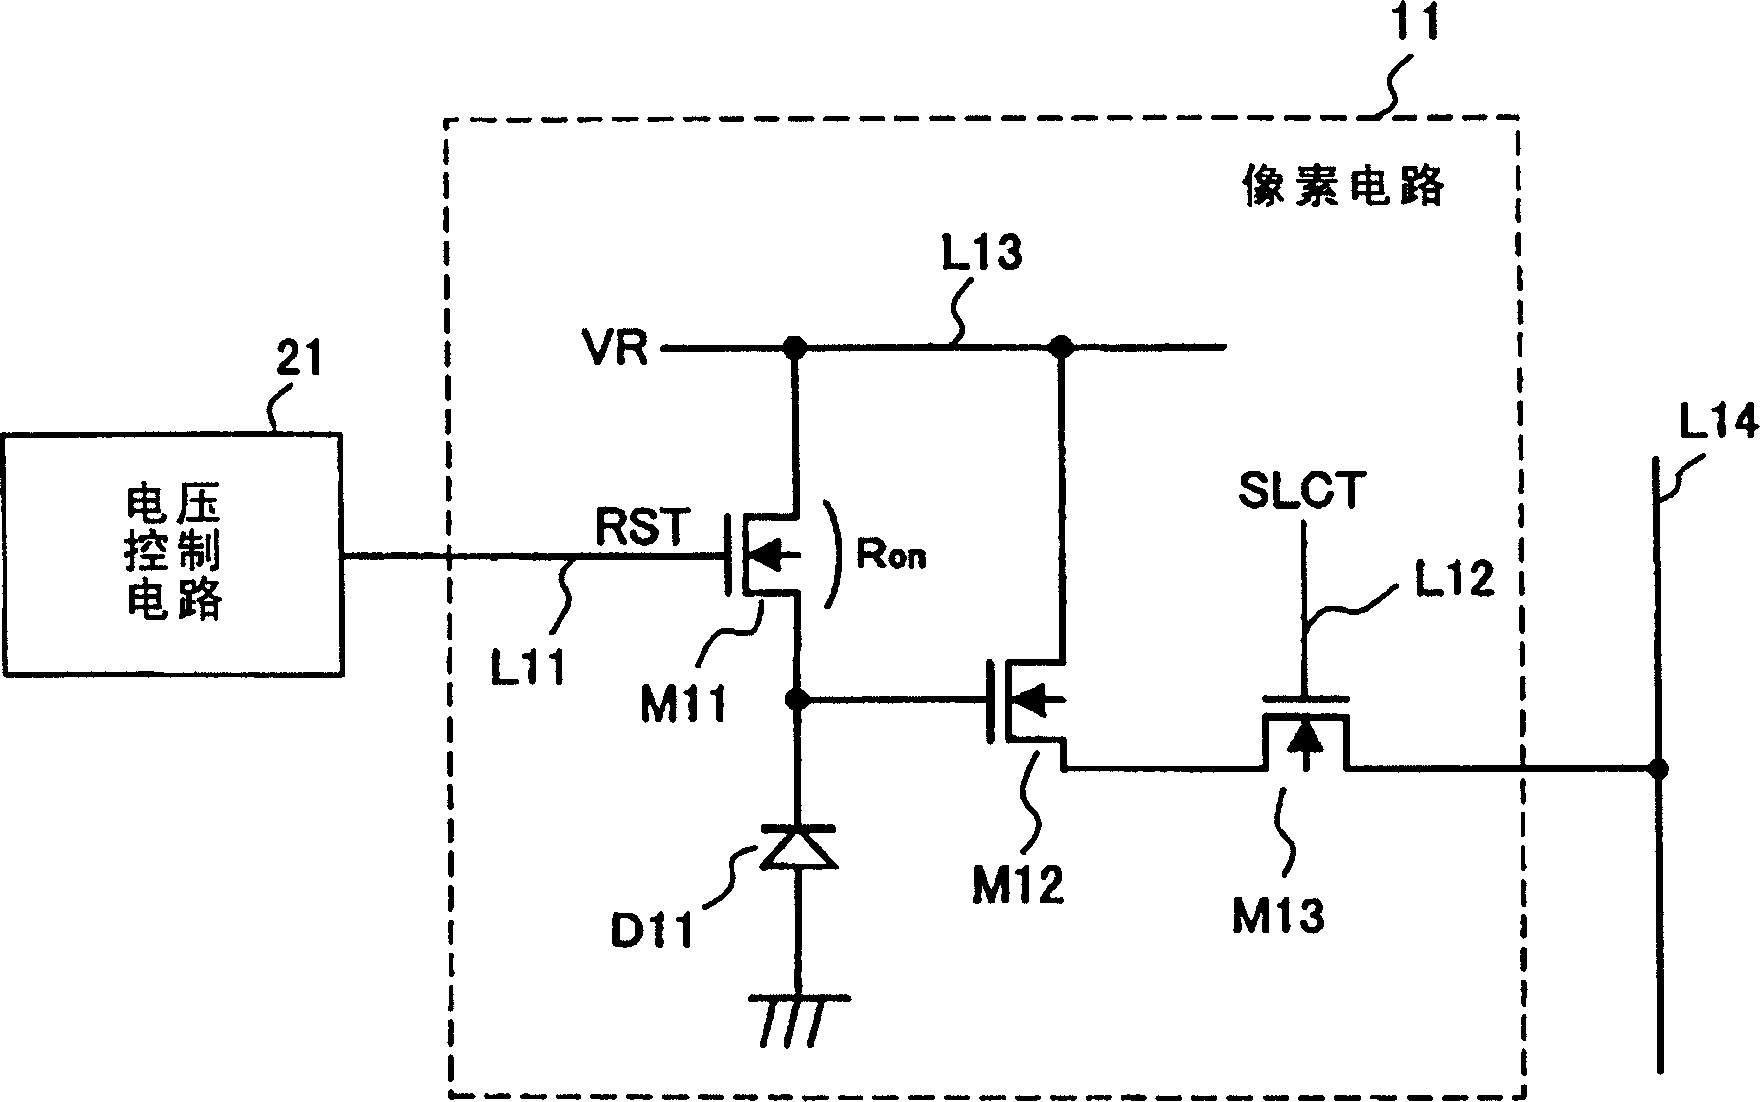 CMOS image sensor, reset transistor control circuit and voltage switch circuit